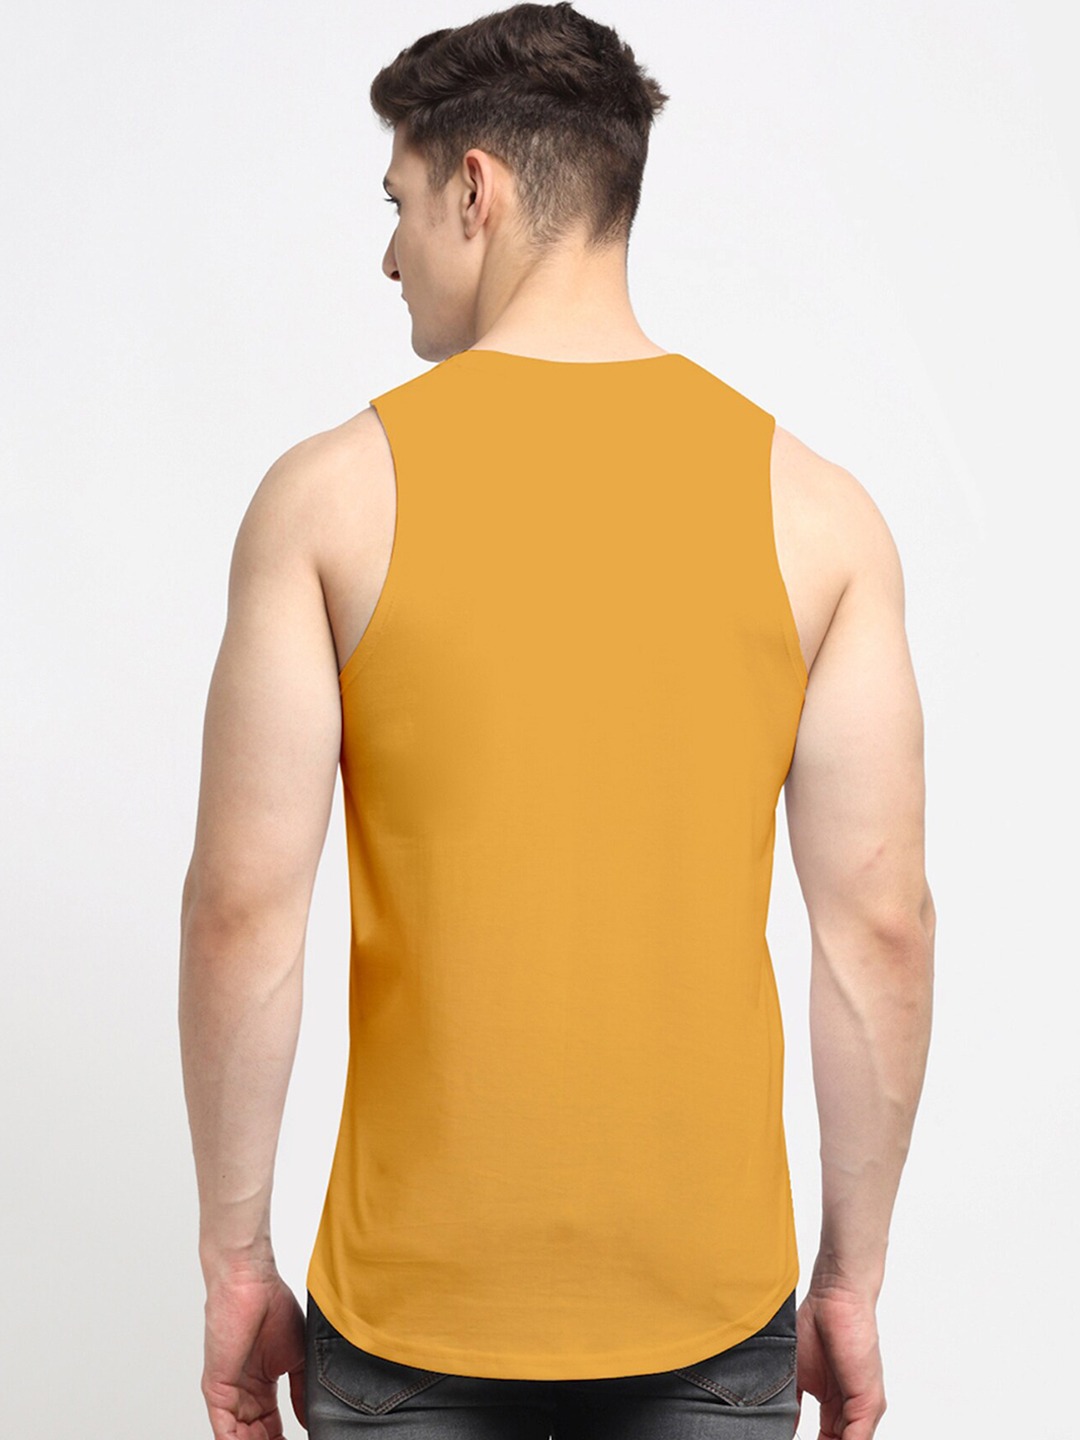 Clothing Innerwear Vests | Friskers Men Gold Printed Cotton Innerwear Vests - QT12937